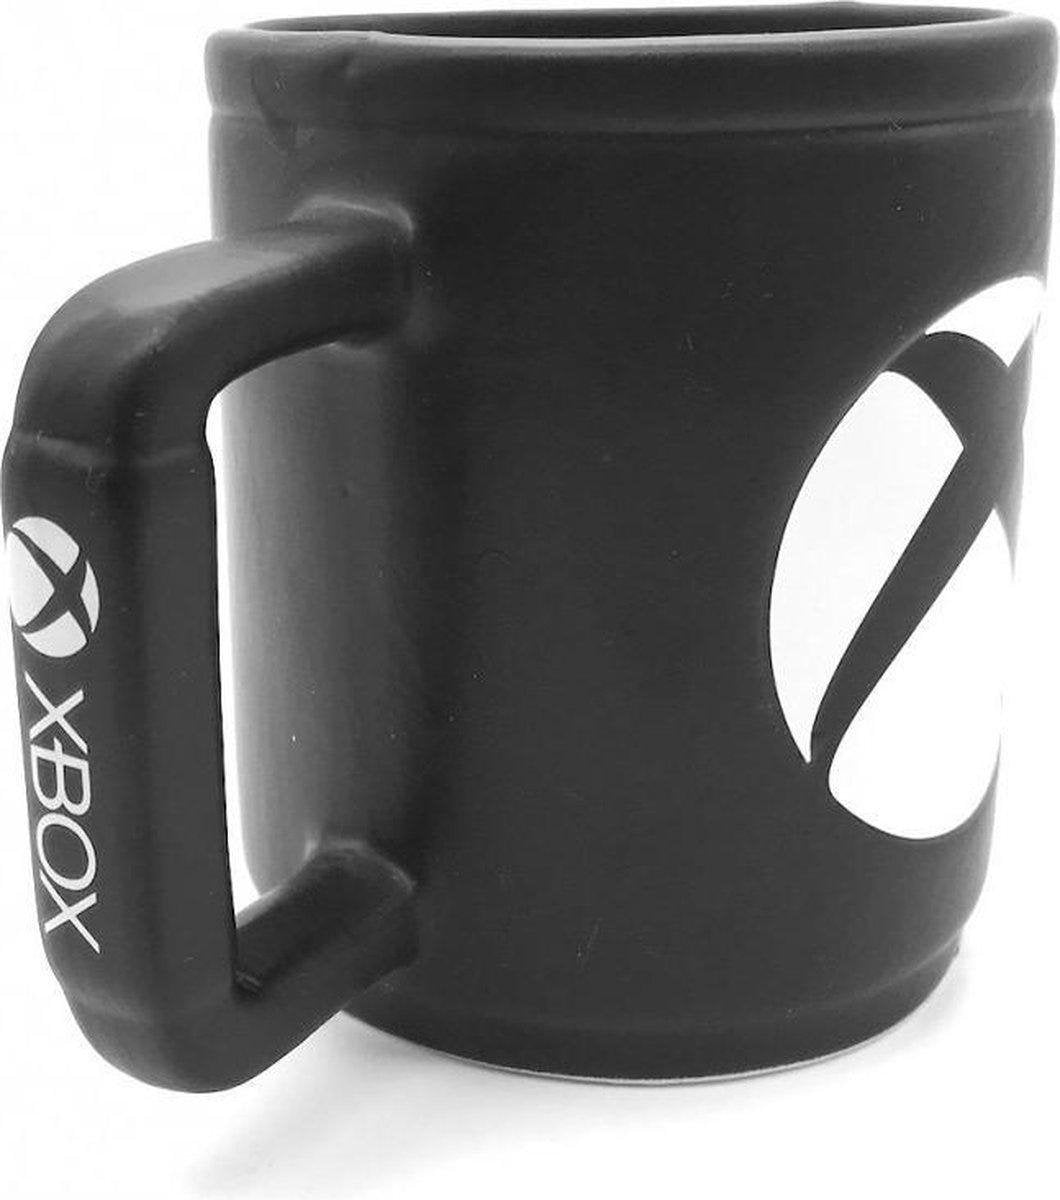 Xbox shaped mug Gamesellers.nl